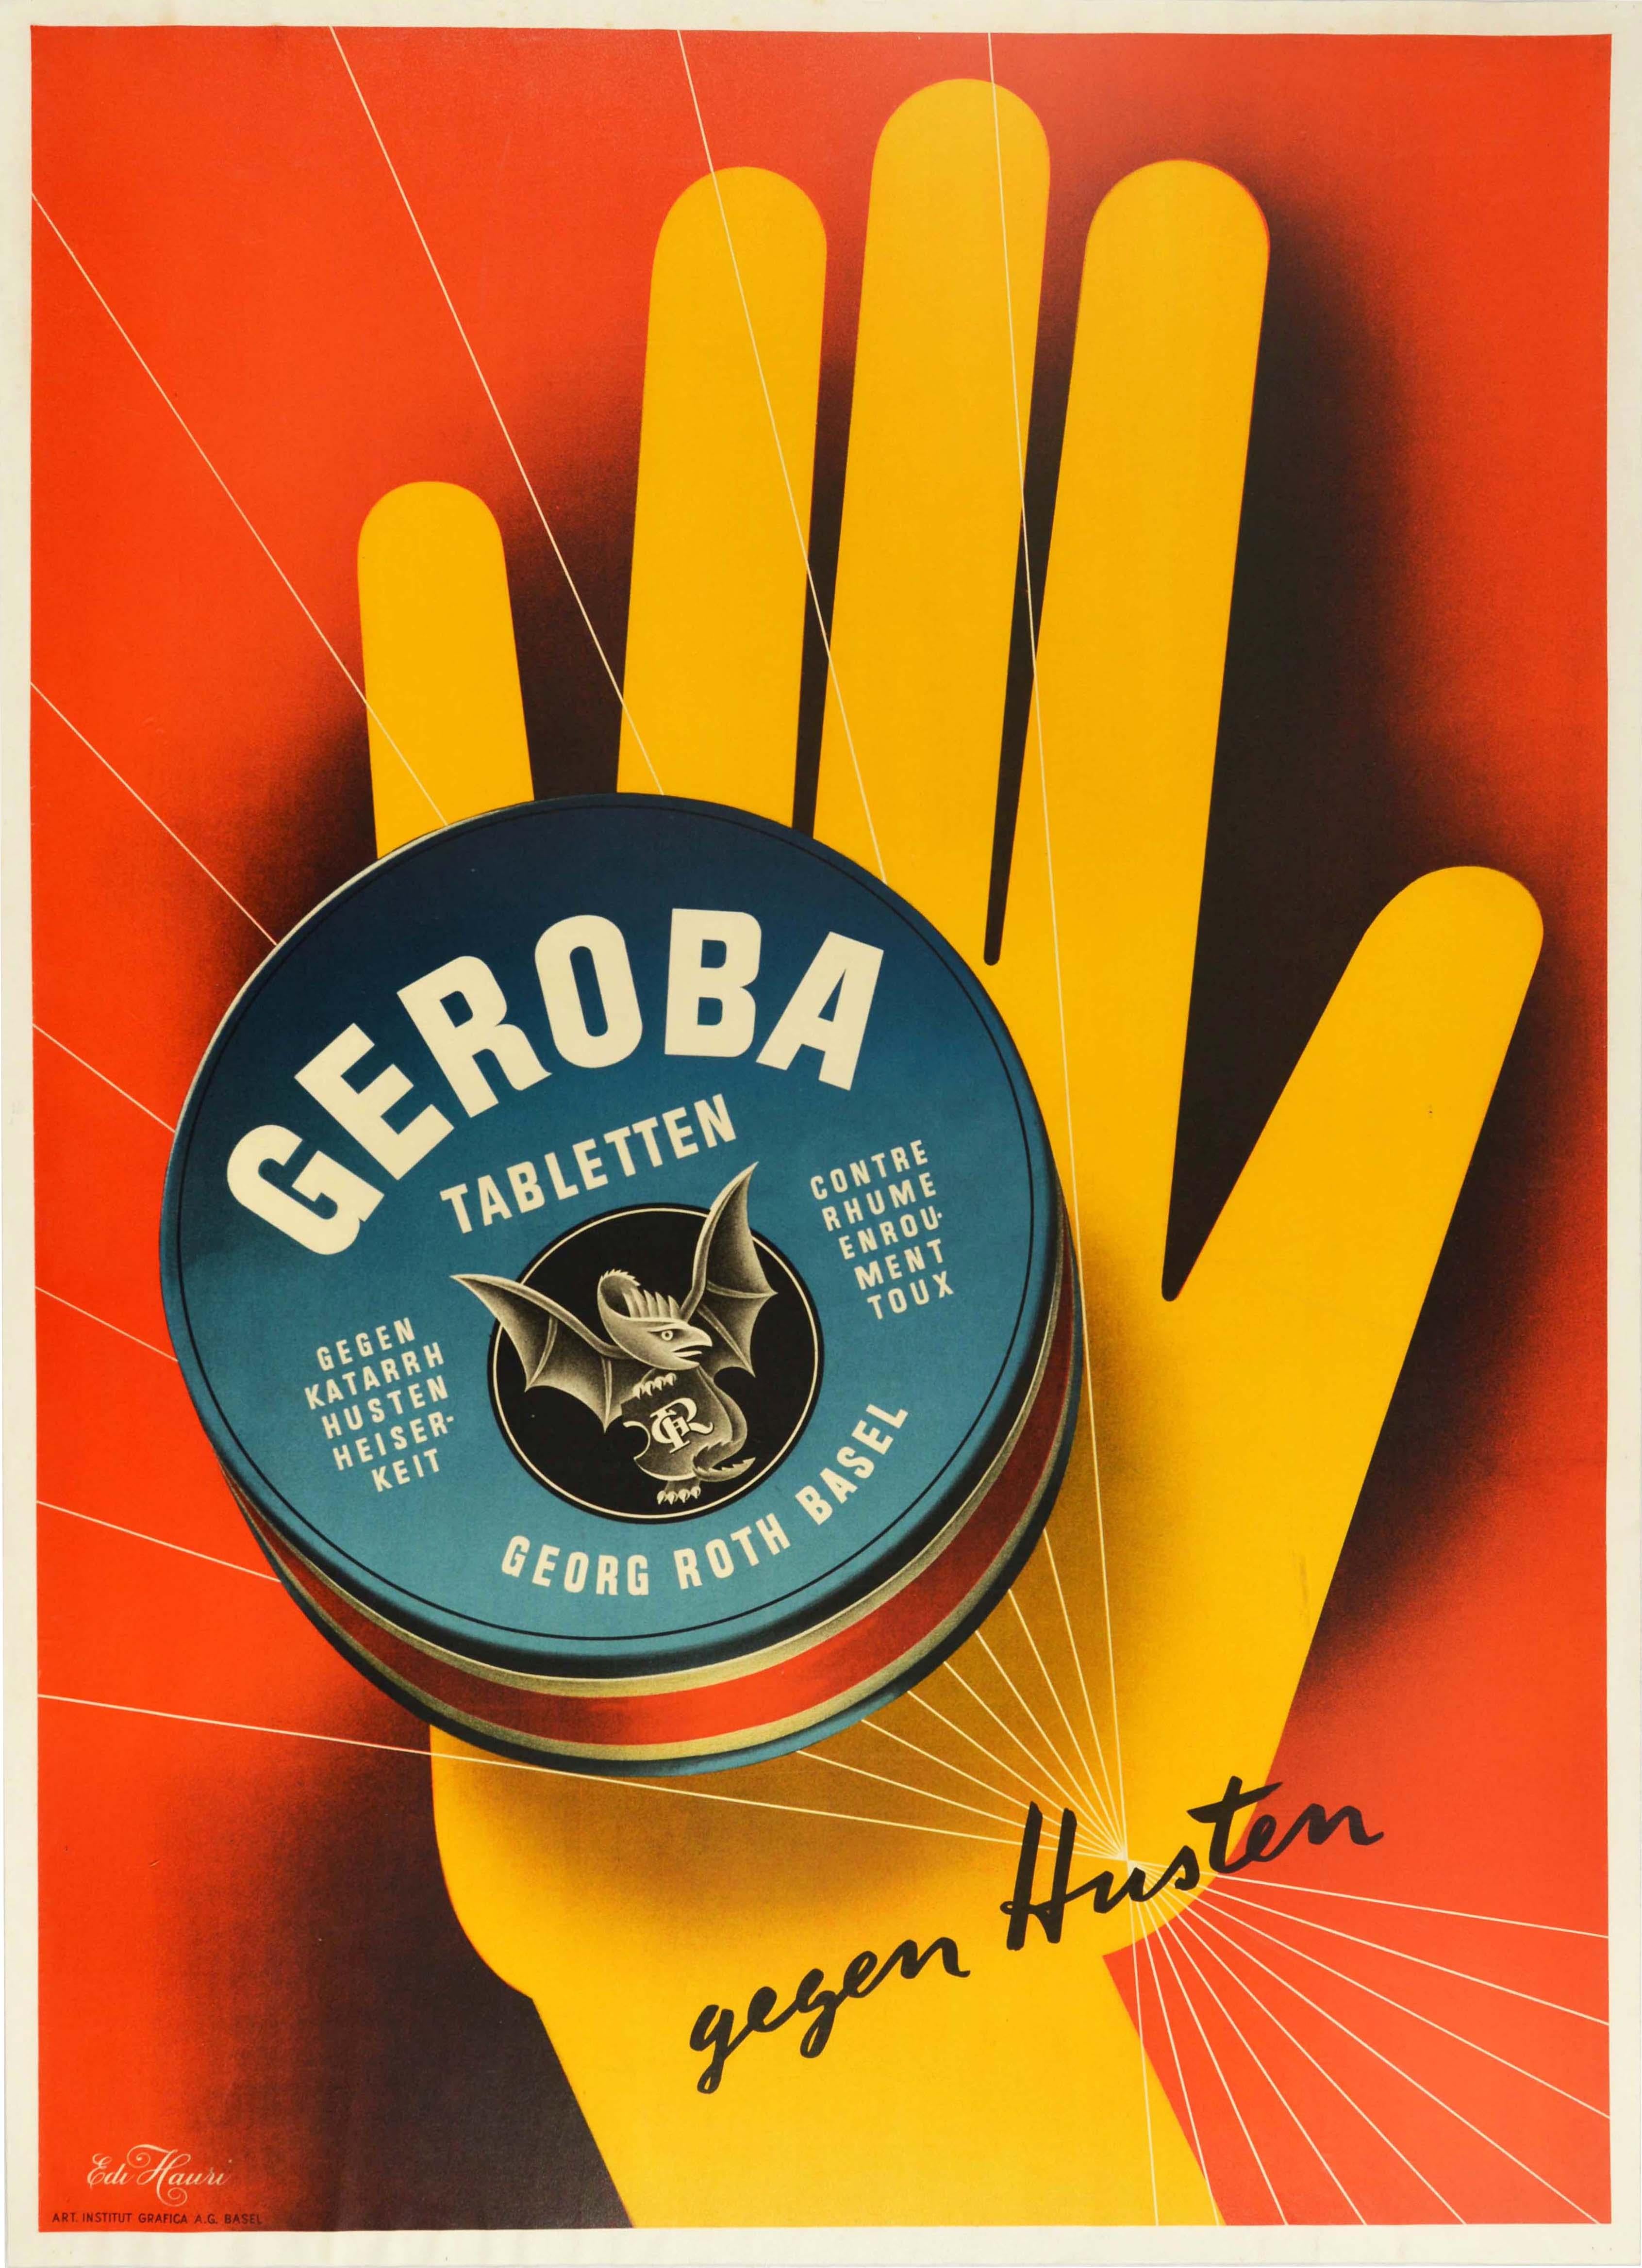 Edi Hauri Print - Original Vintage Poster Geroba Tabletten Cough Lozenges Health Graphic Design